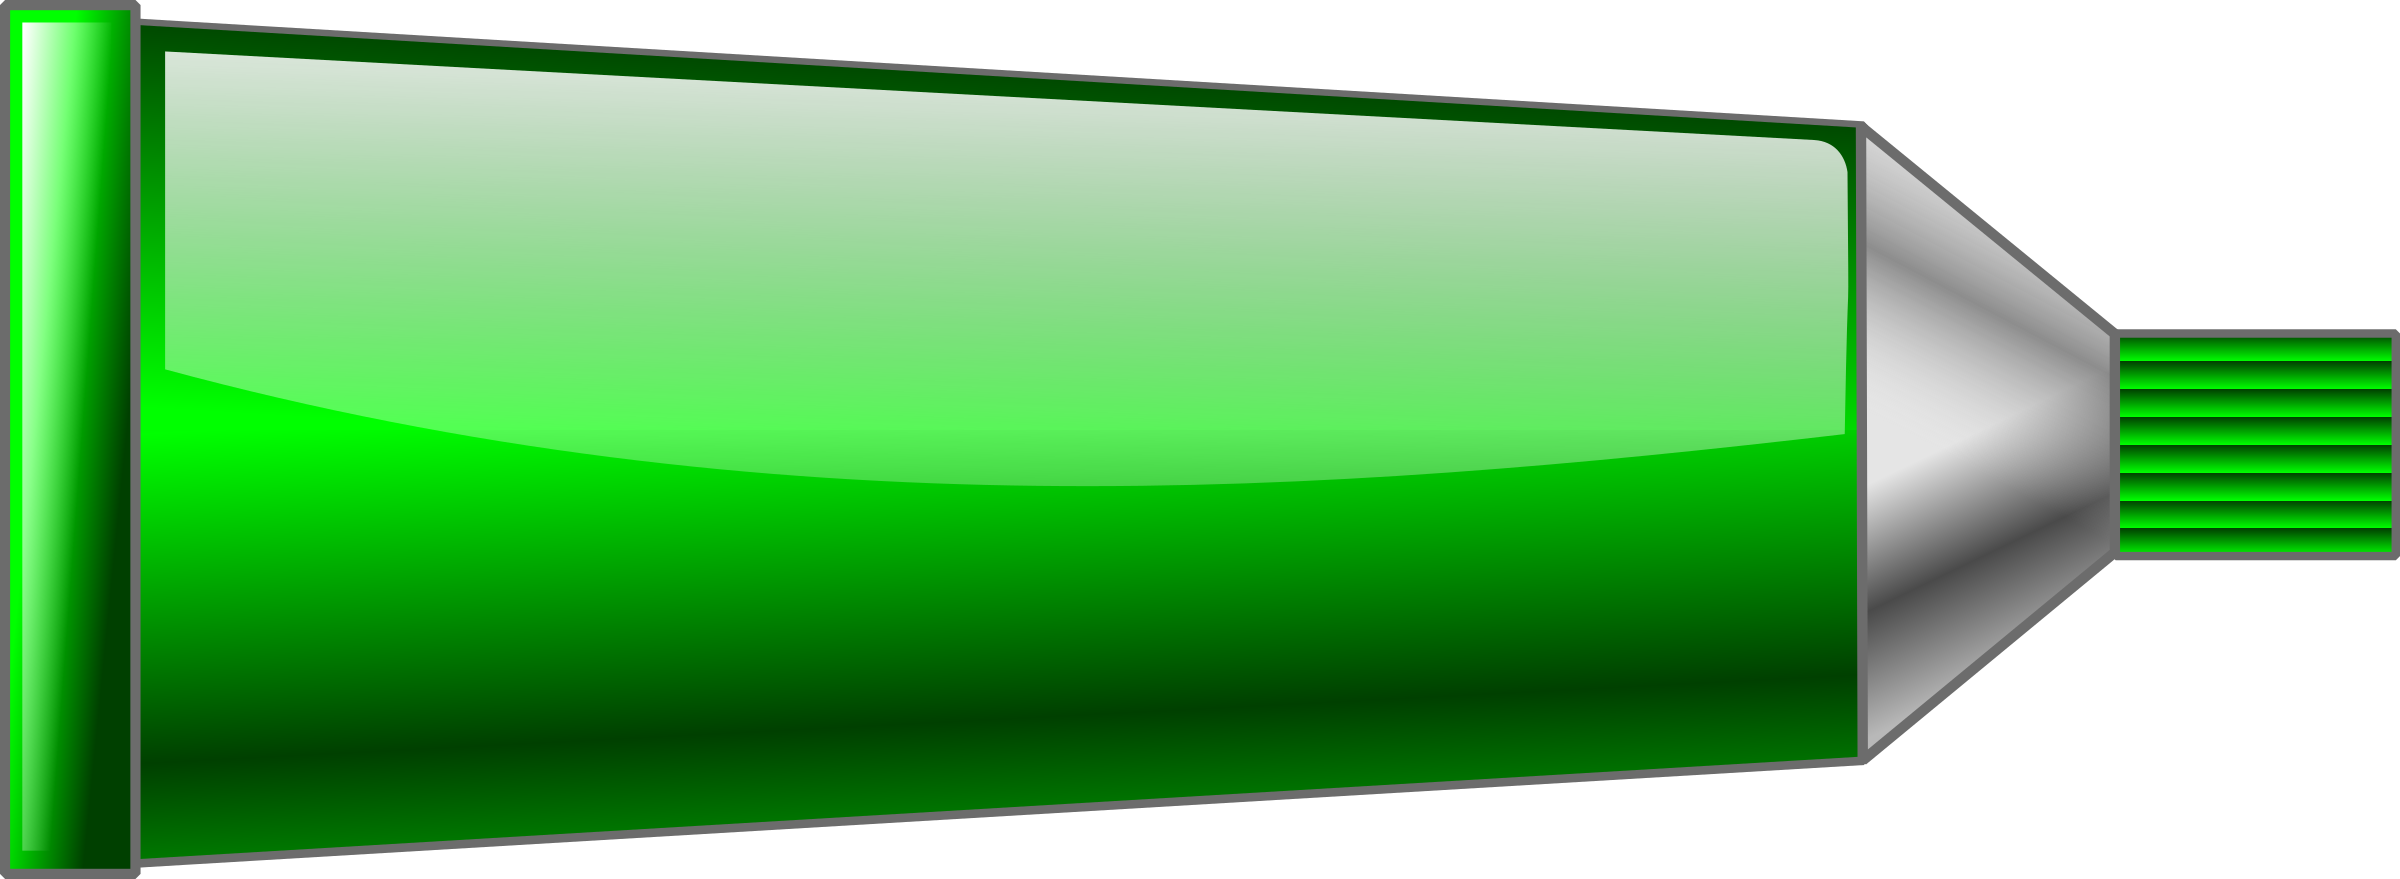 Color tube big image. Green clipart green colour